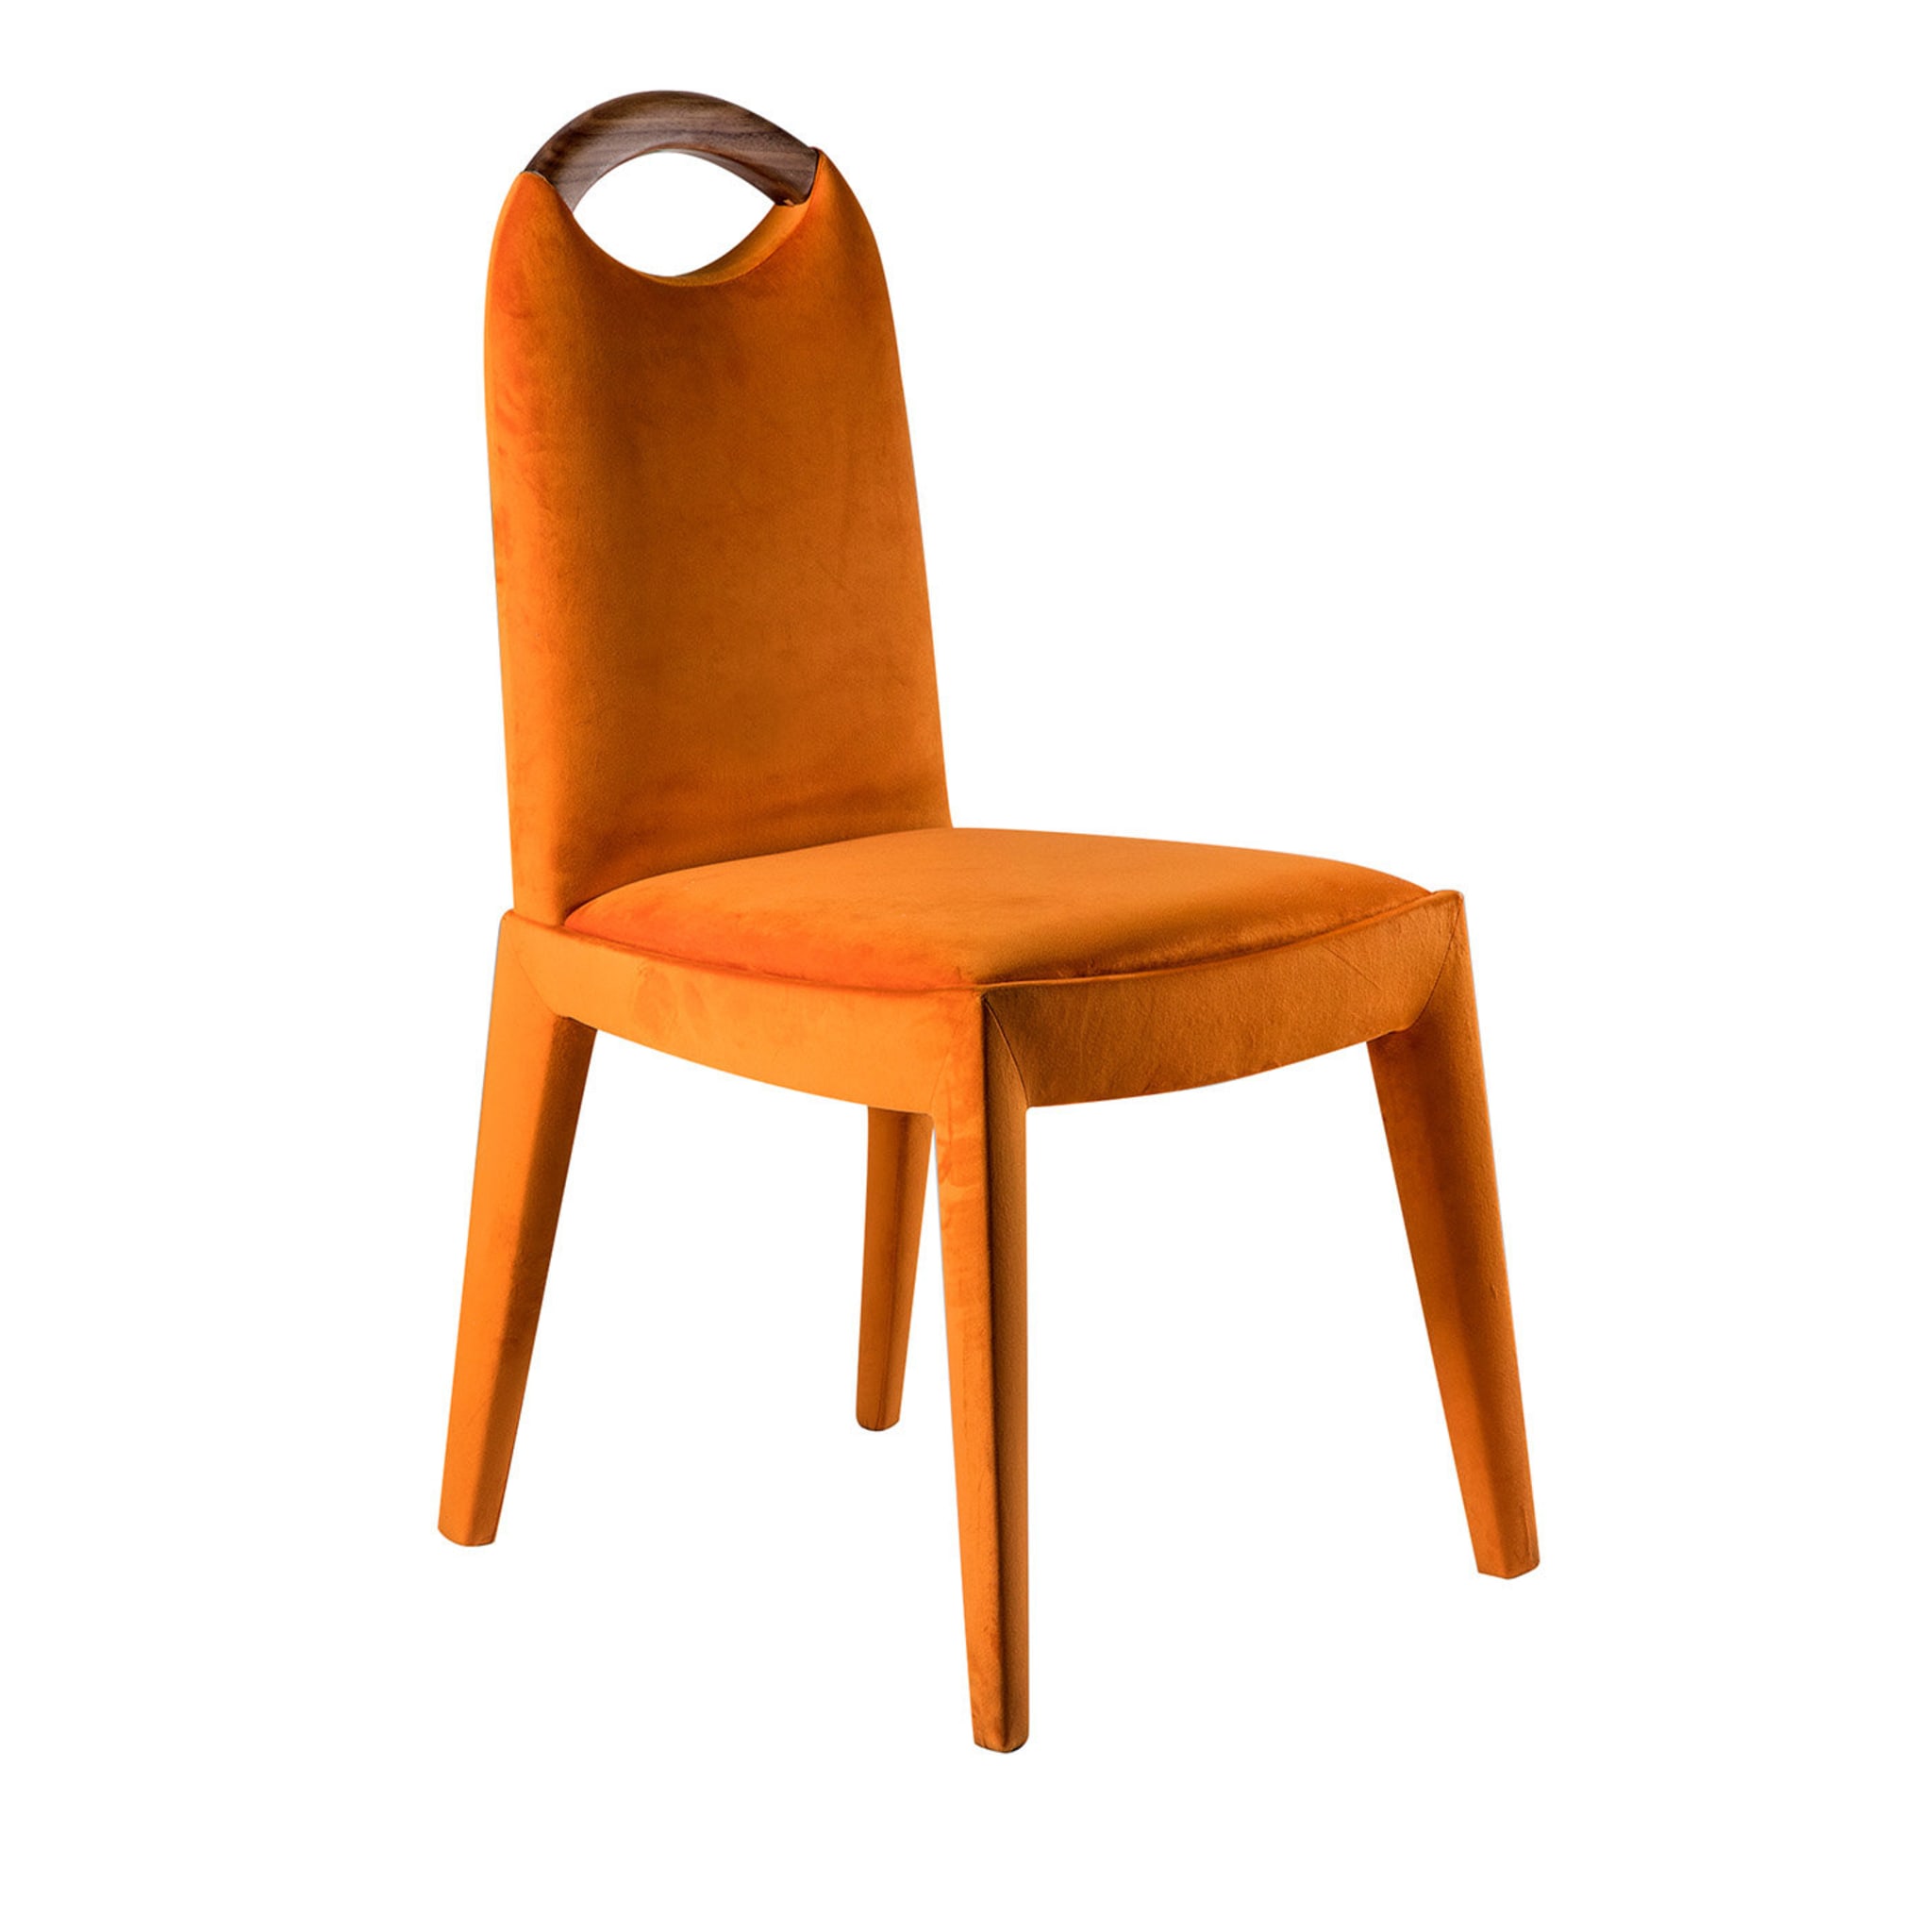 Antonietta Orange Chair by Simone Ciarmoli and Miguel Queda - Main view